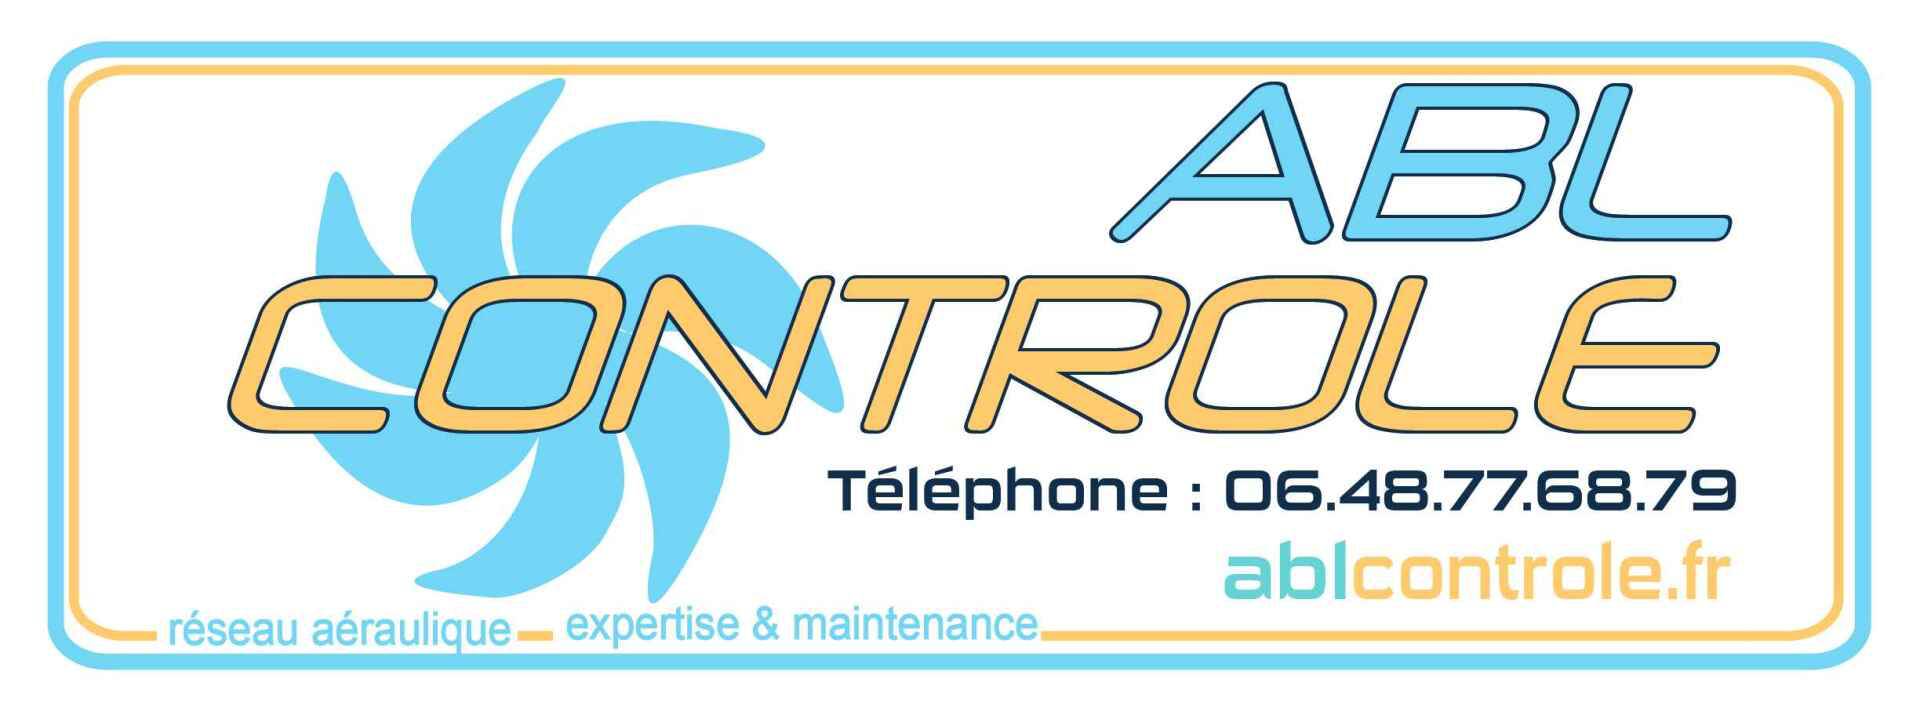 ABL CONTROLE_logo